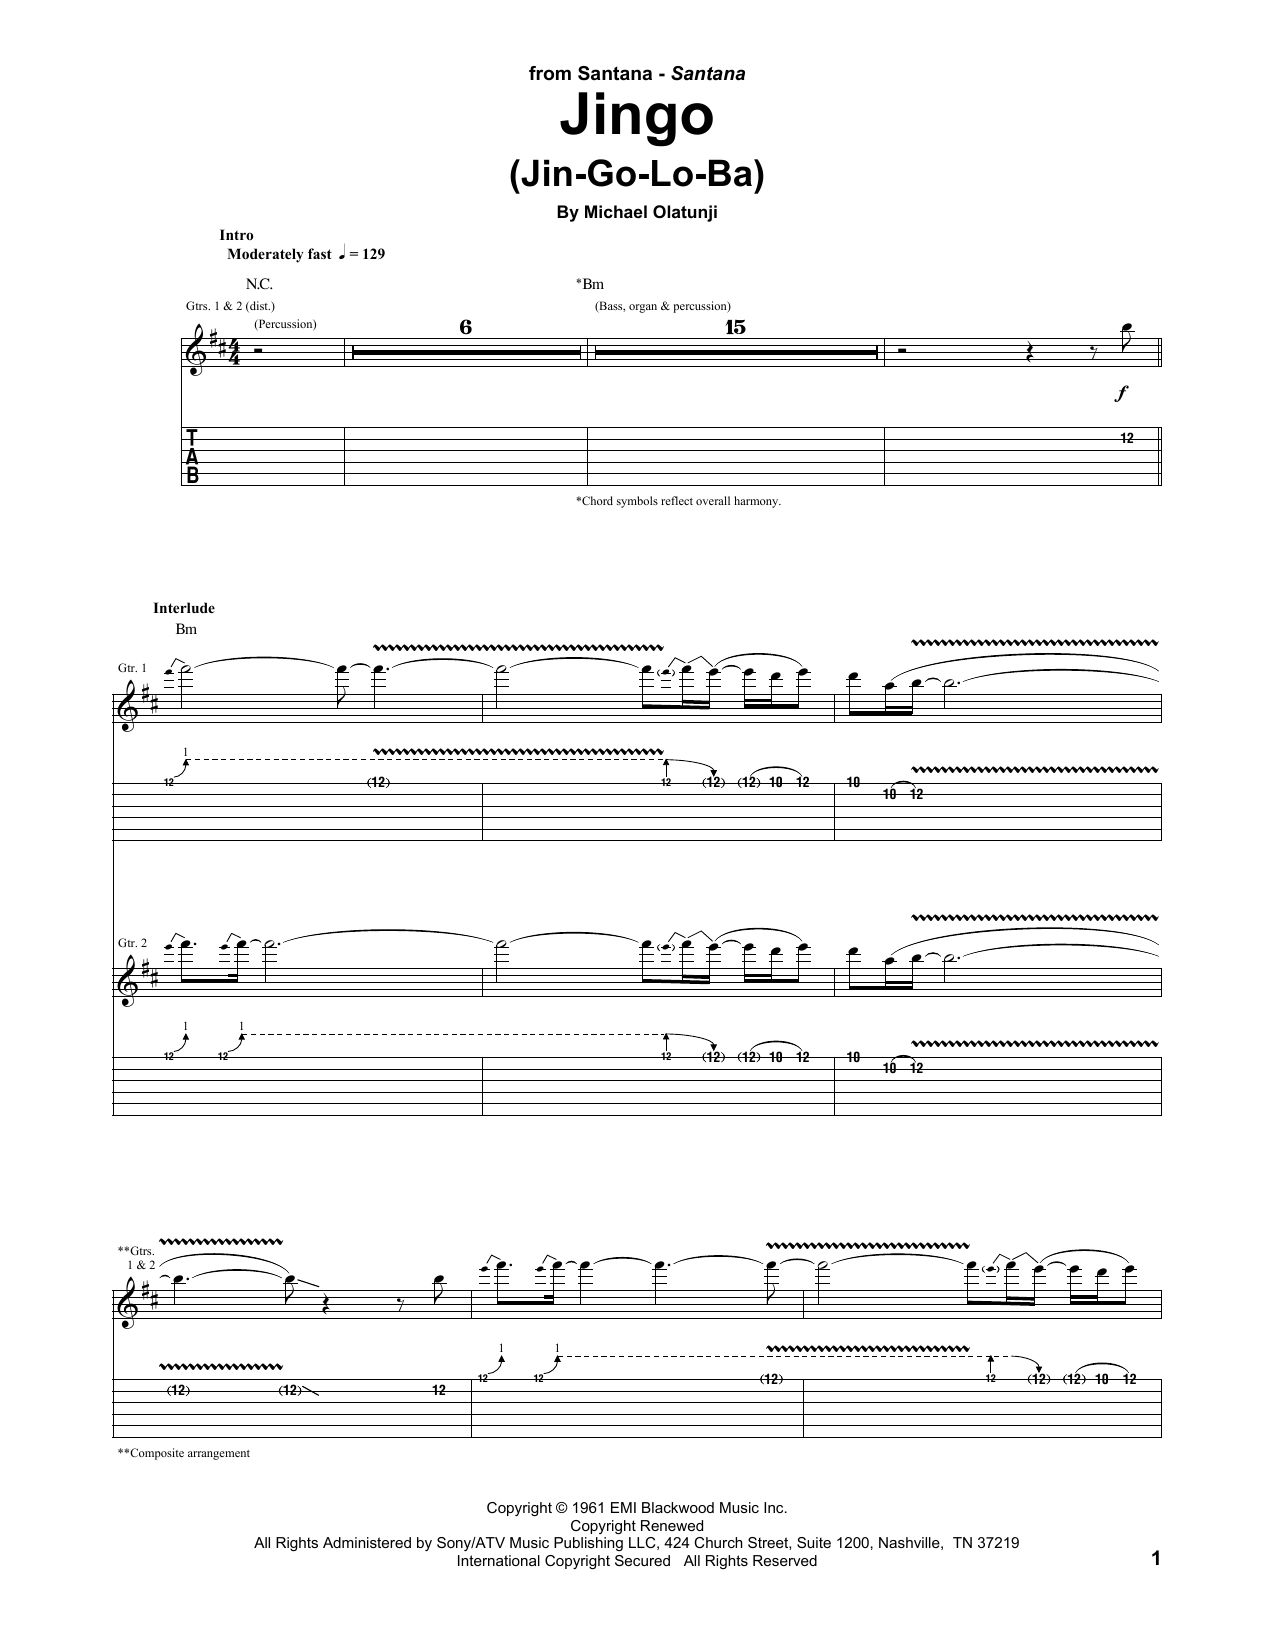 Santana Jingo (Jin-Go-Lo-Ba) Sheet Music Notes & Chords for Real Book – Melody & Chords - Download or Print PDF